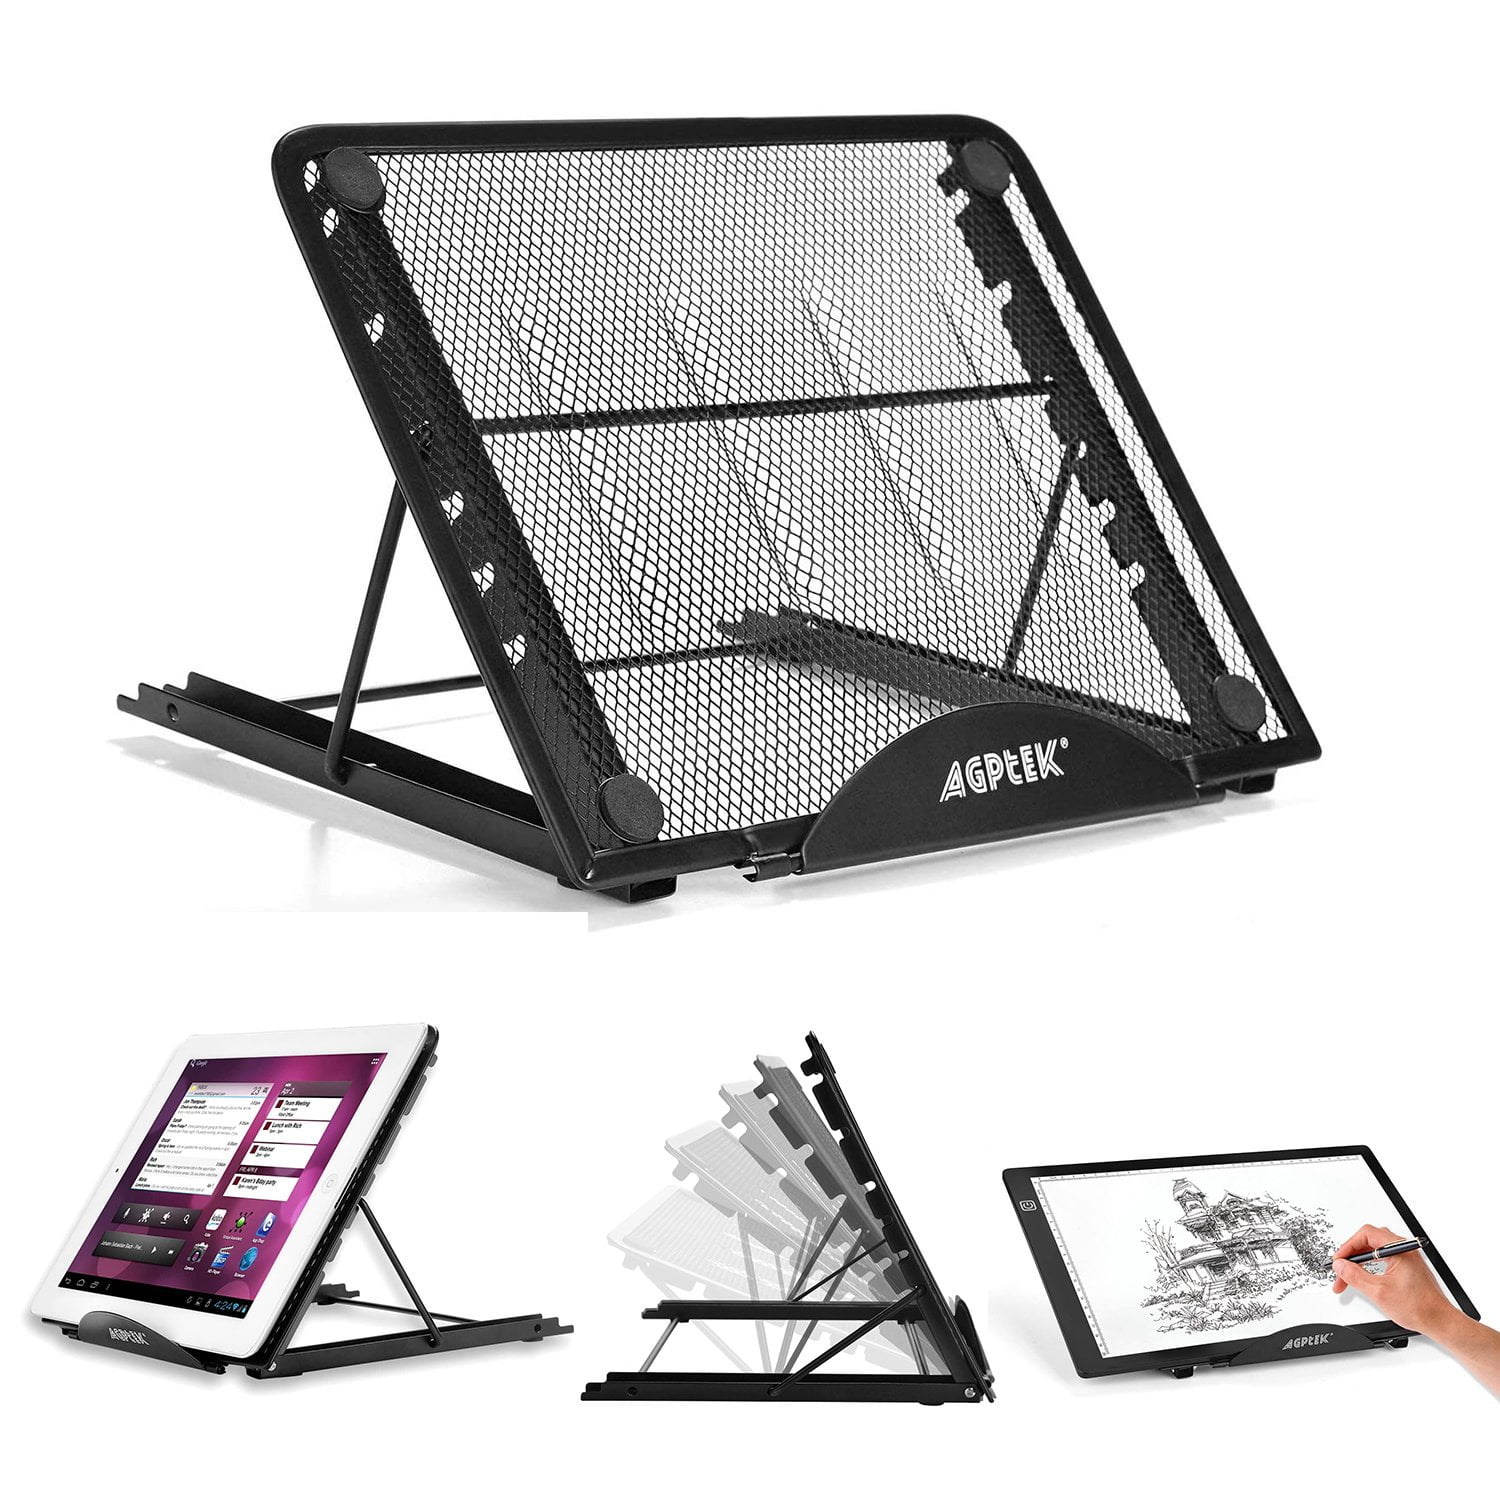 AGPTEK Supporto Regolabile con Rete Metallica ventilata per Pad tracing/Laptop/Tablet/Notebook 